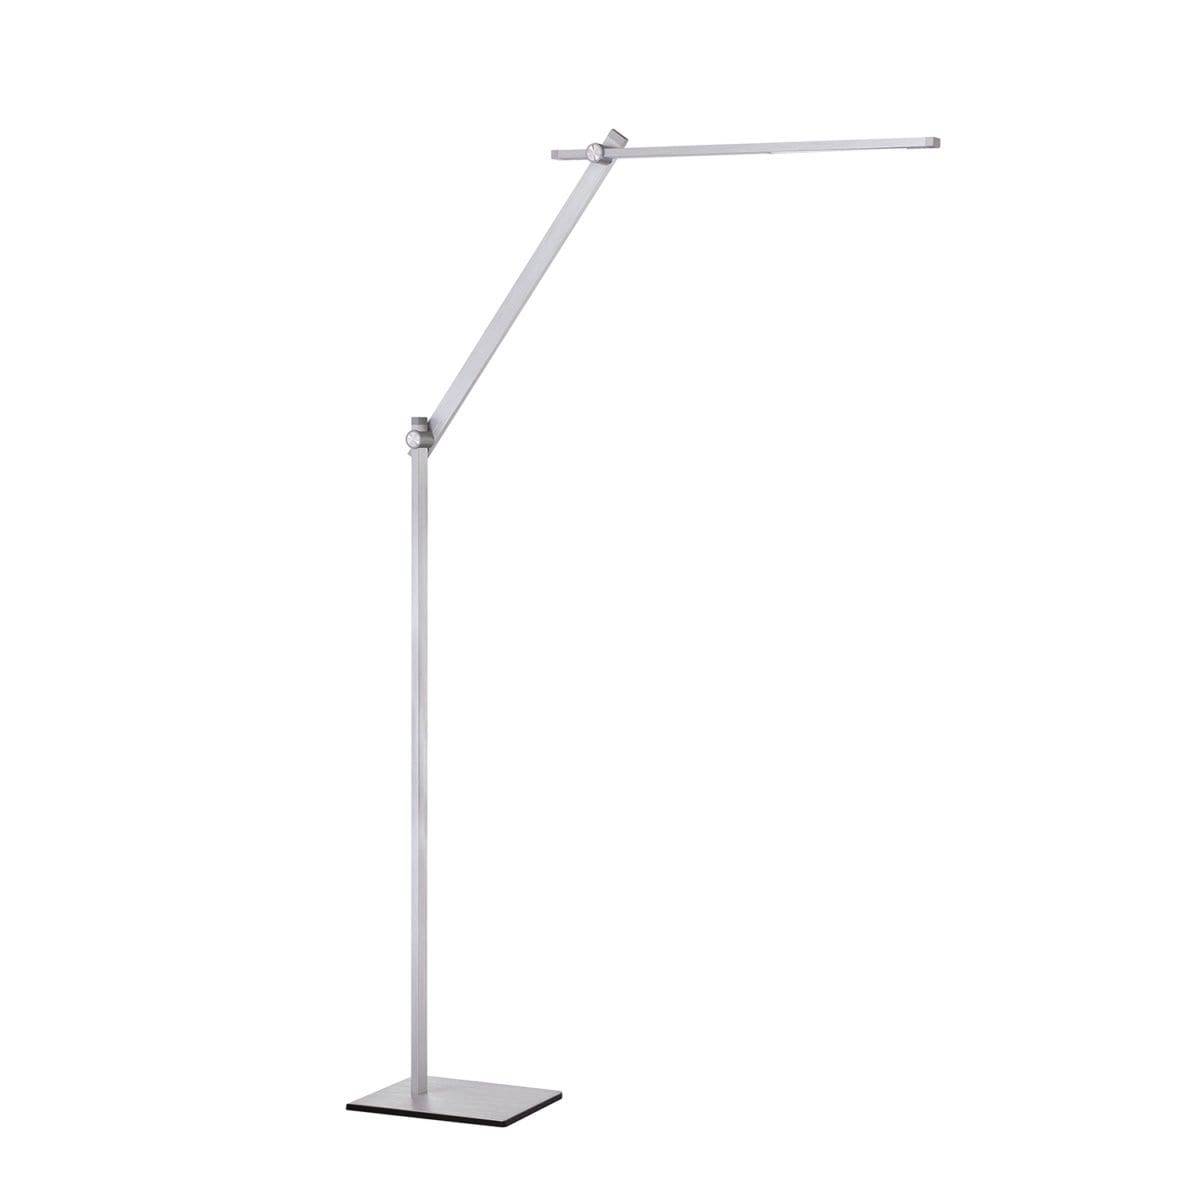 148 FL5017AL
LED Floor Lamp available in
Brushed Aluminum or Black
Regular Price $381.99
Sale Price $267.99